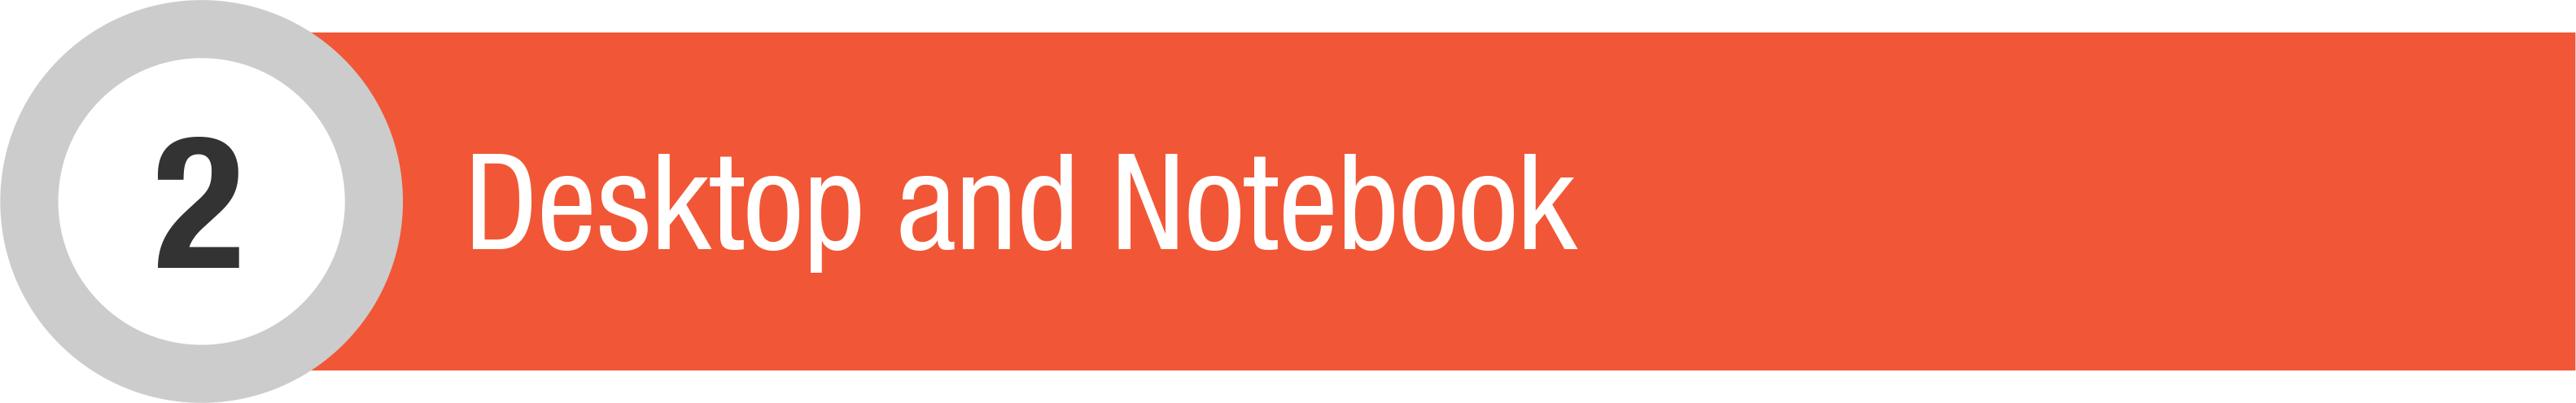 2 Servers, Systems, Notebooks